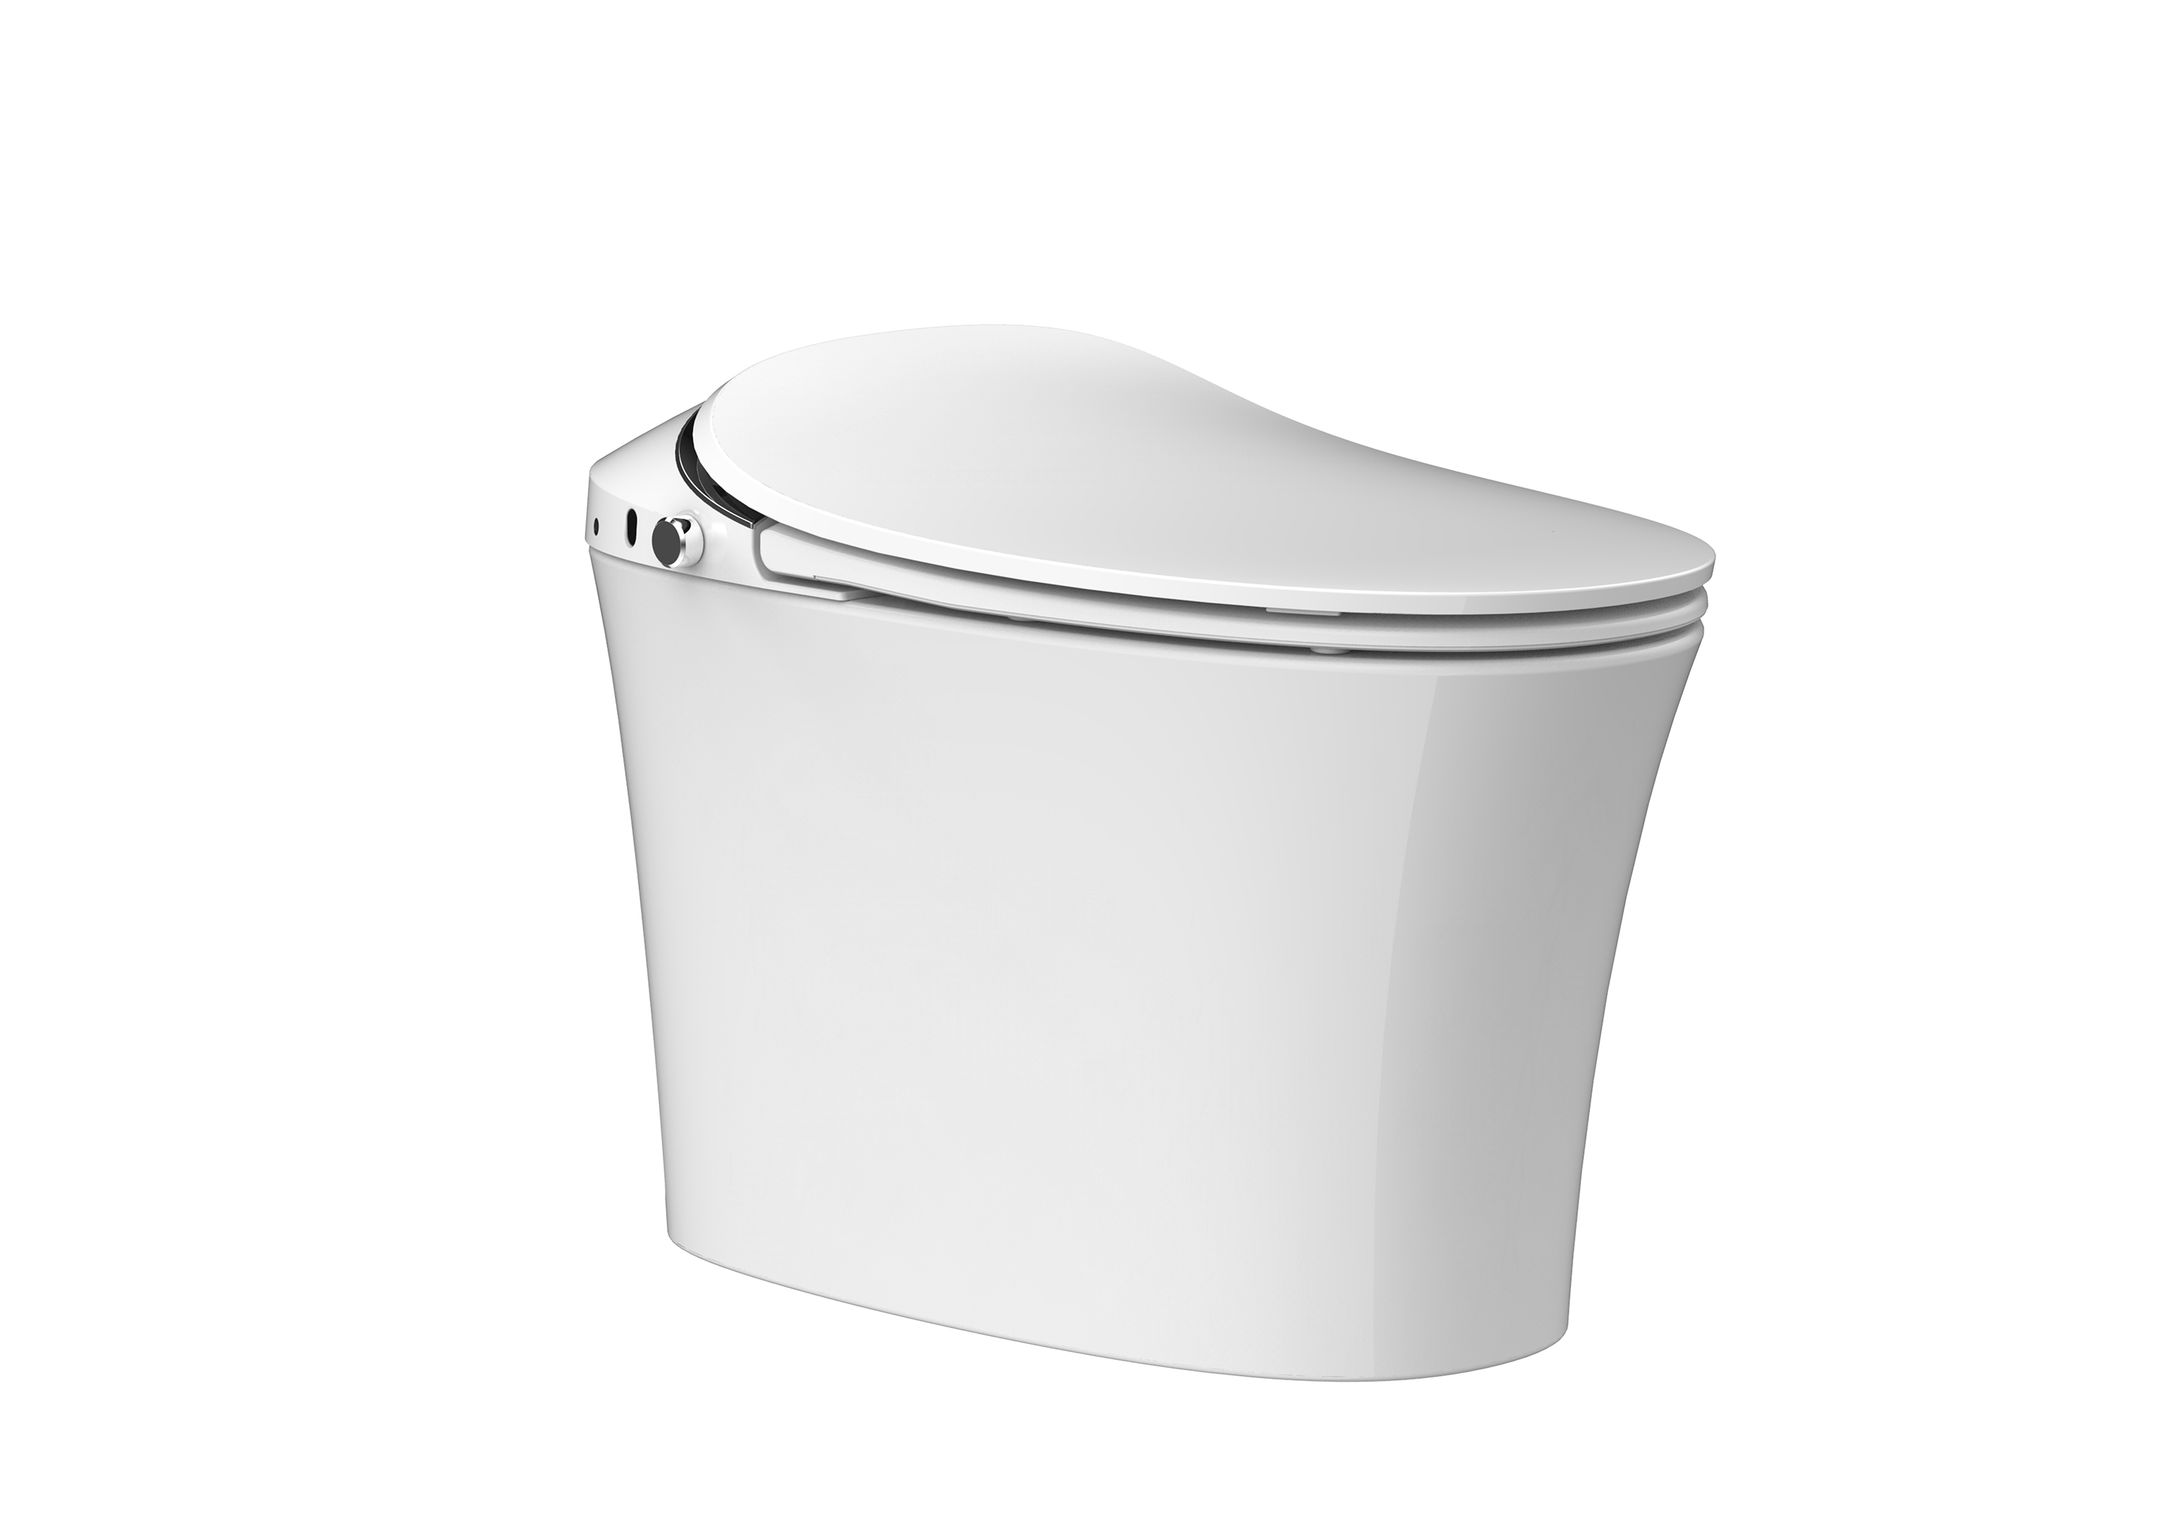 Smart toilet | iF WORLD DESIGN GUIDE